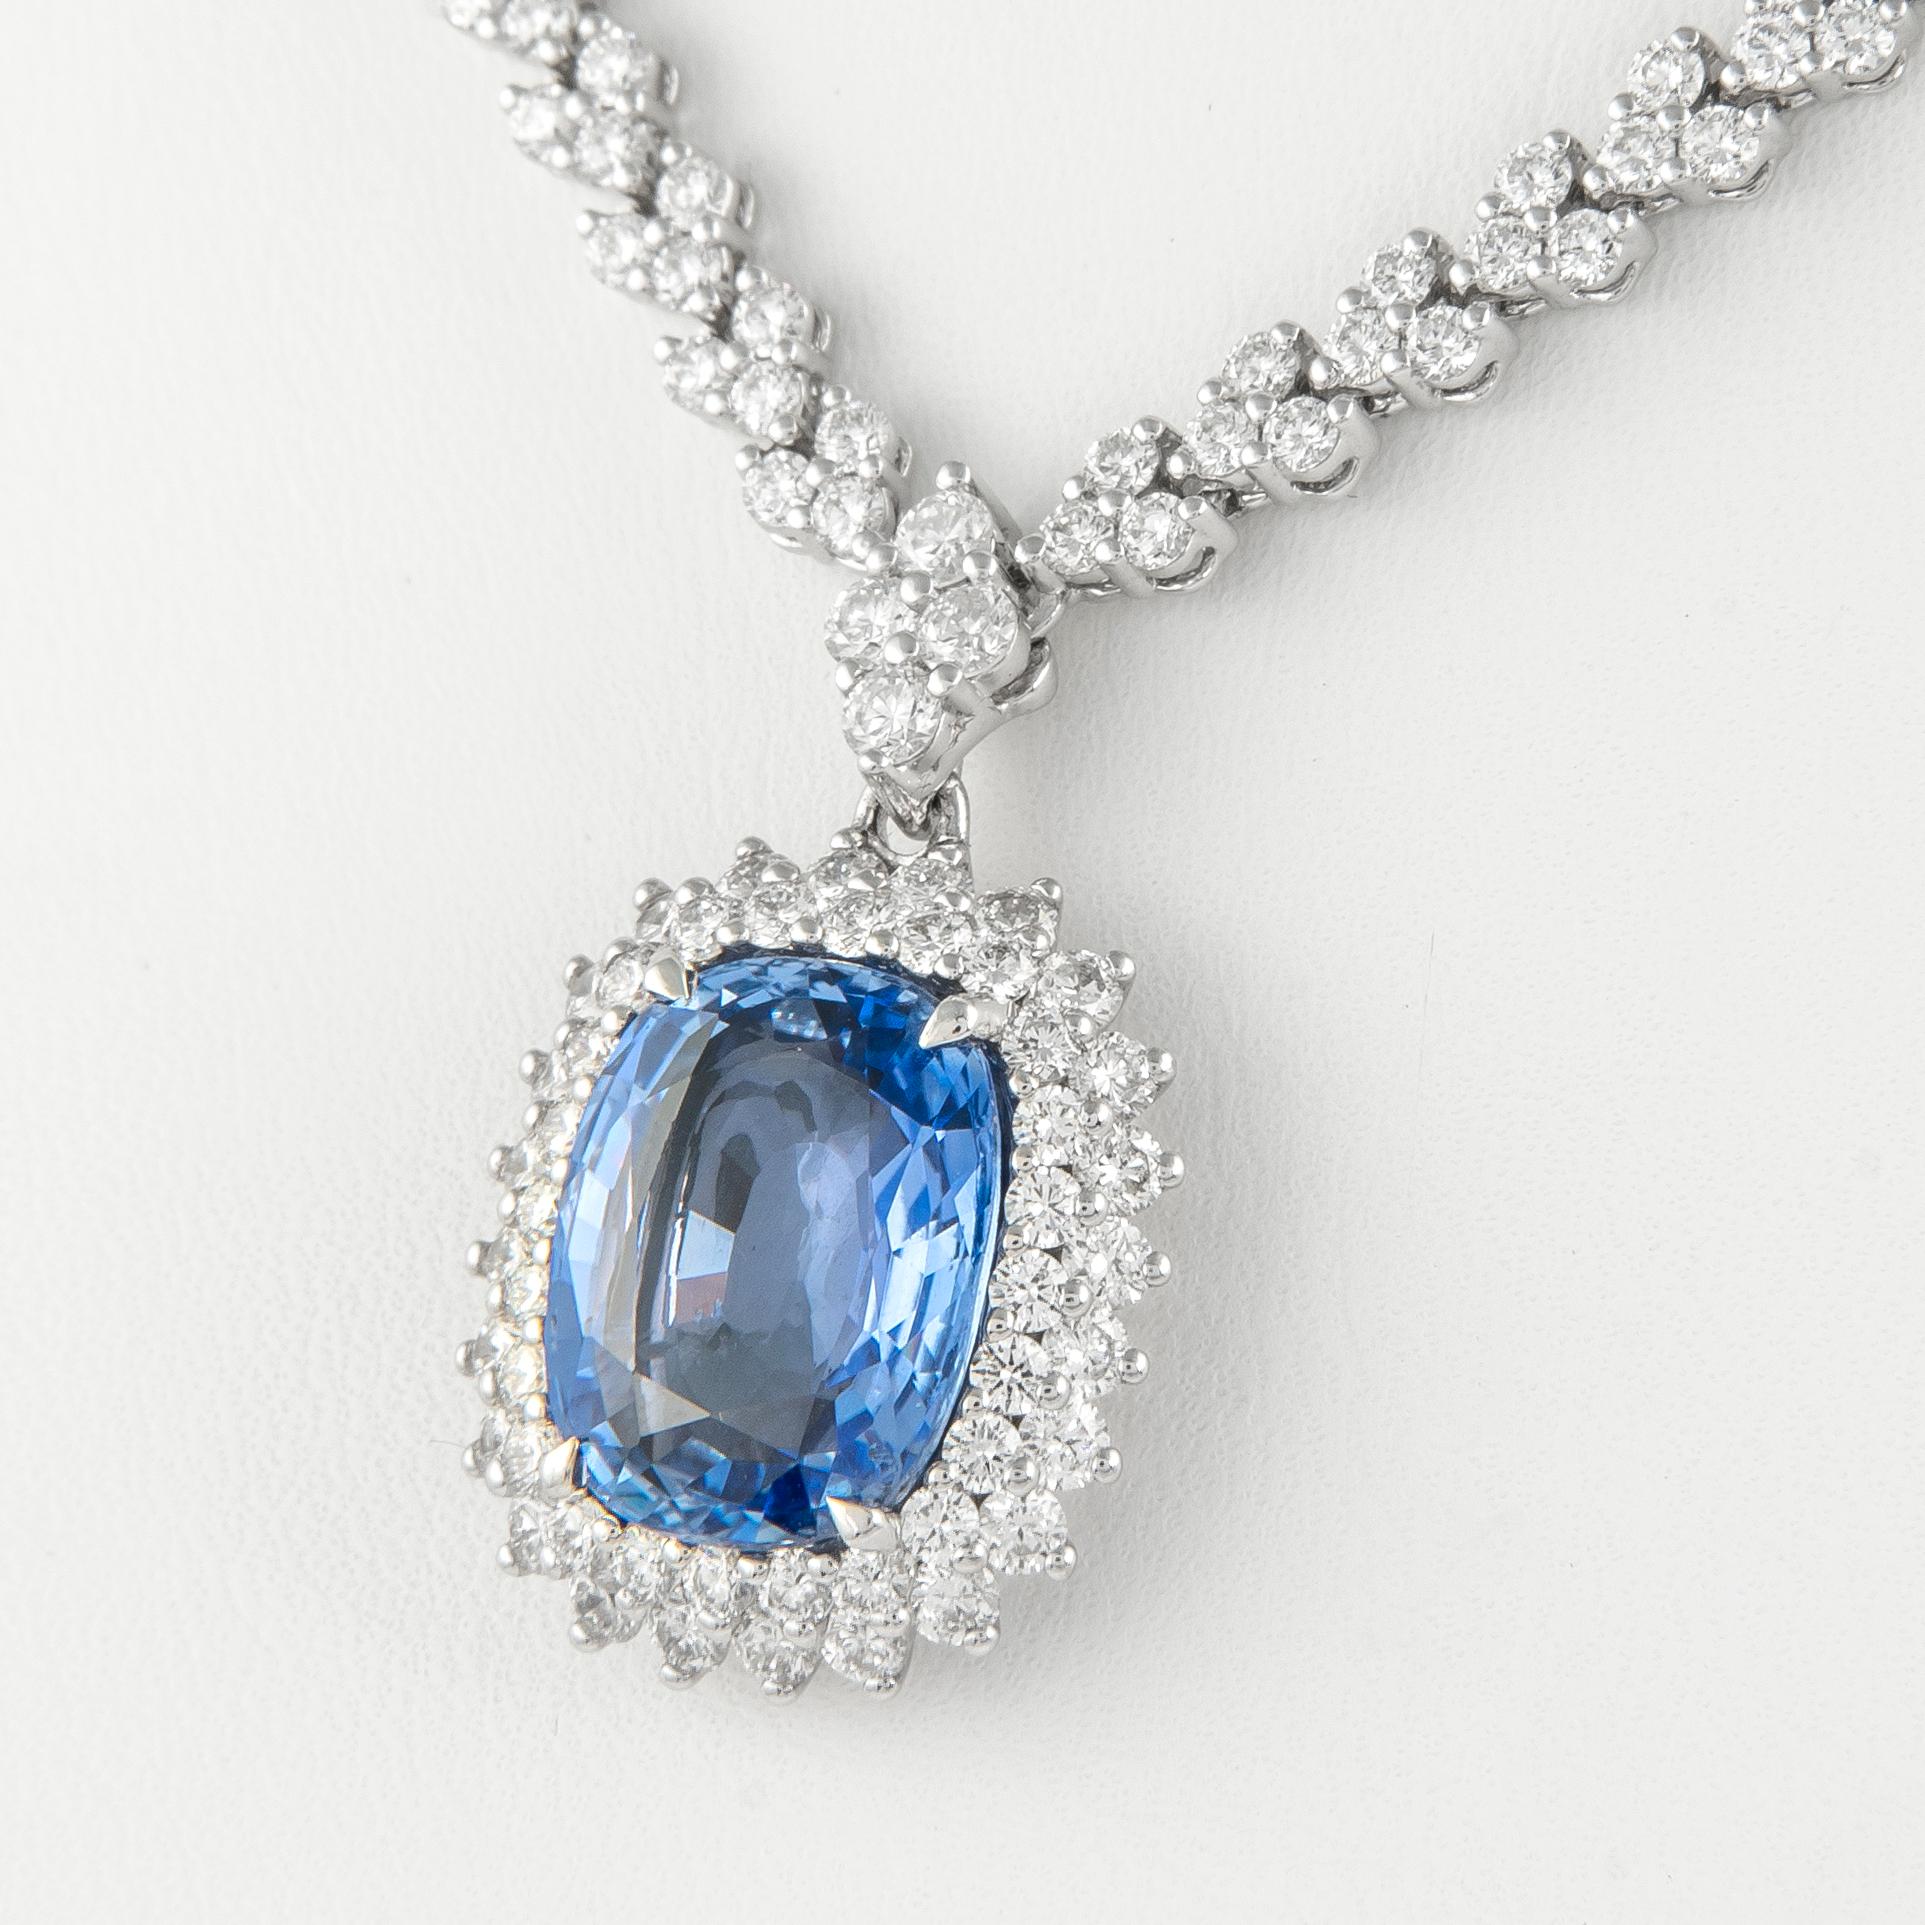 Cushion Cut Alexander GIA 15.46ctt Ceylon Sapphire No Heat with Diamonds Necklace 18k